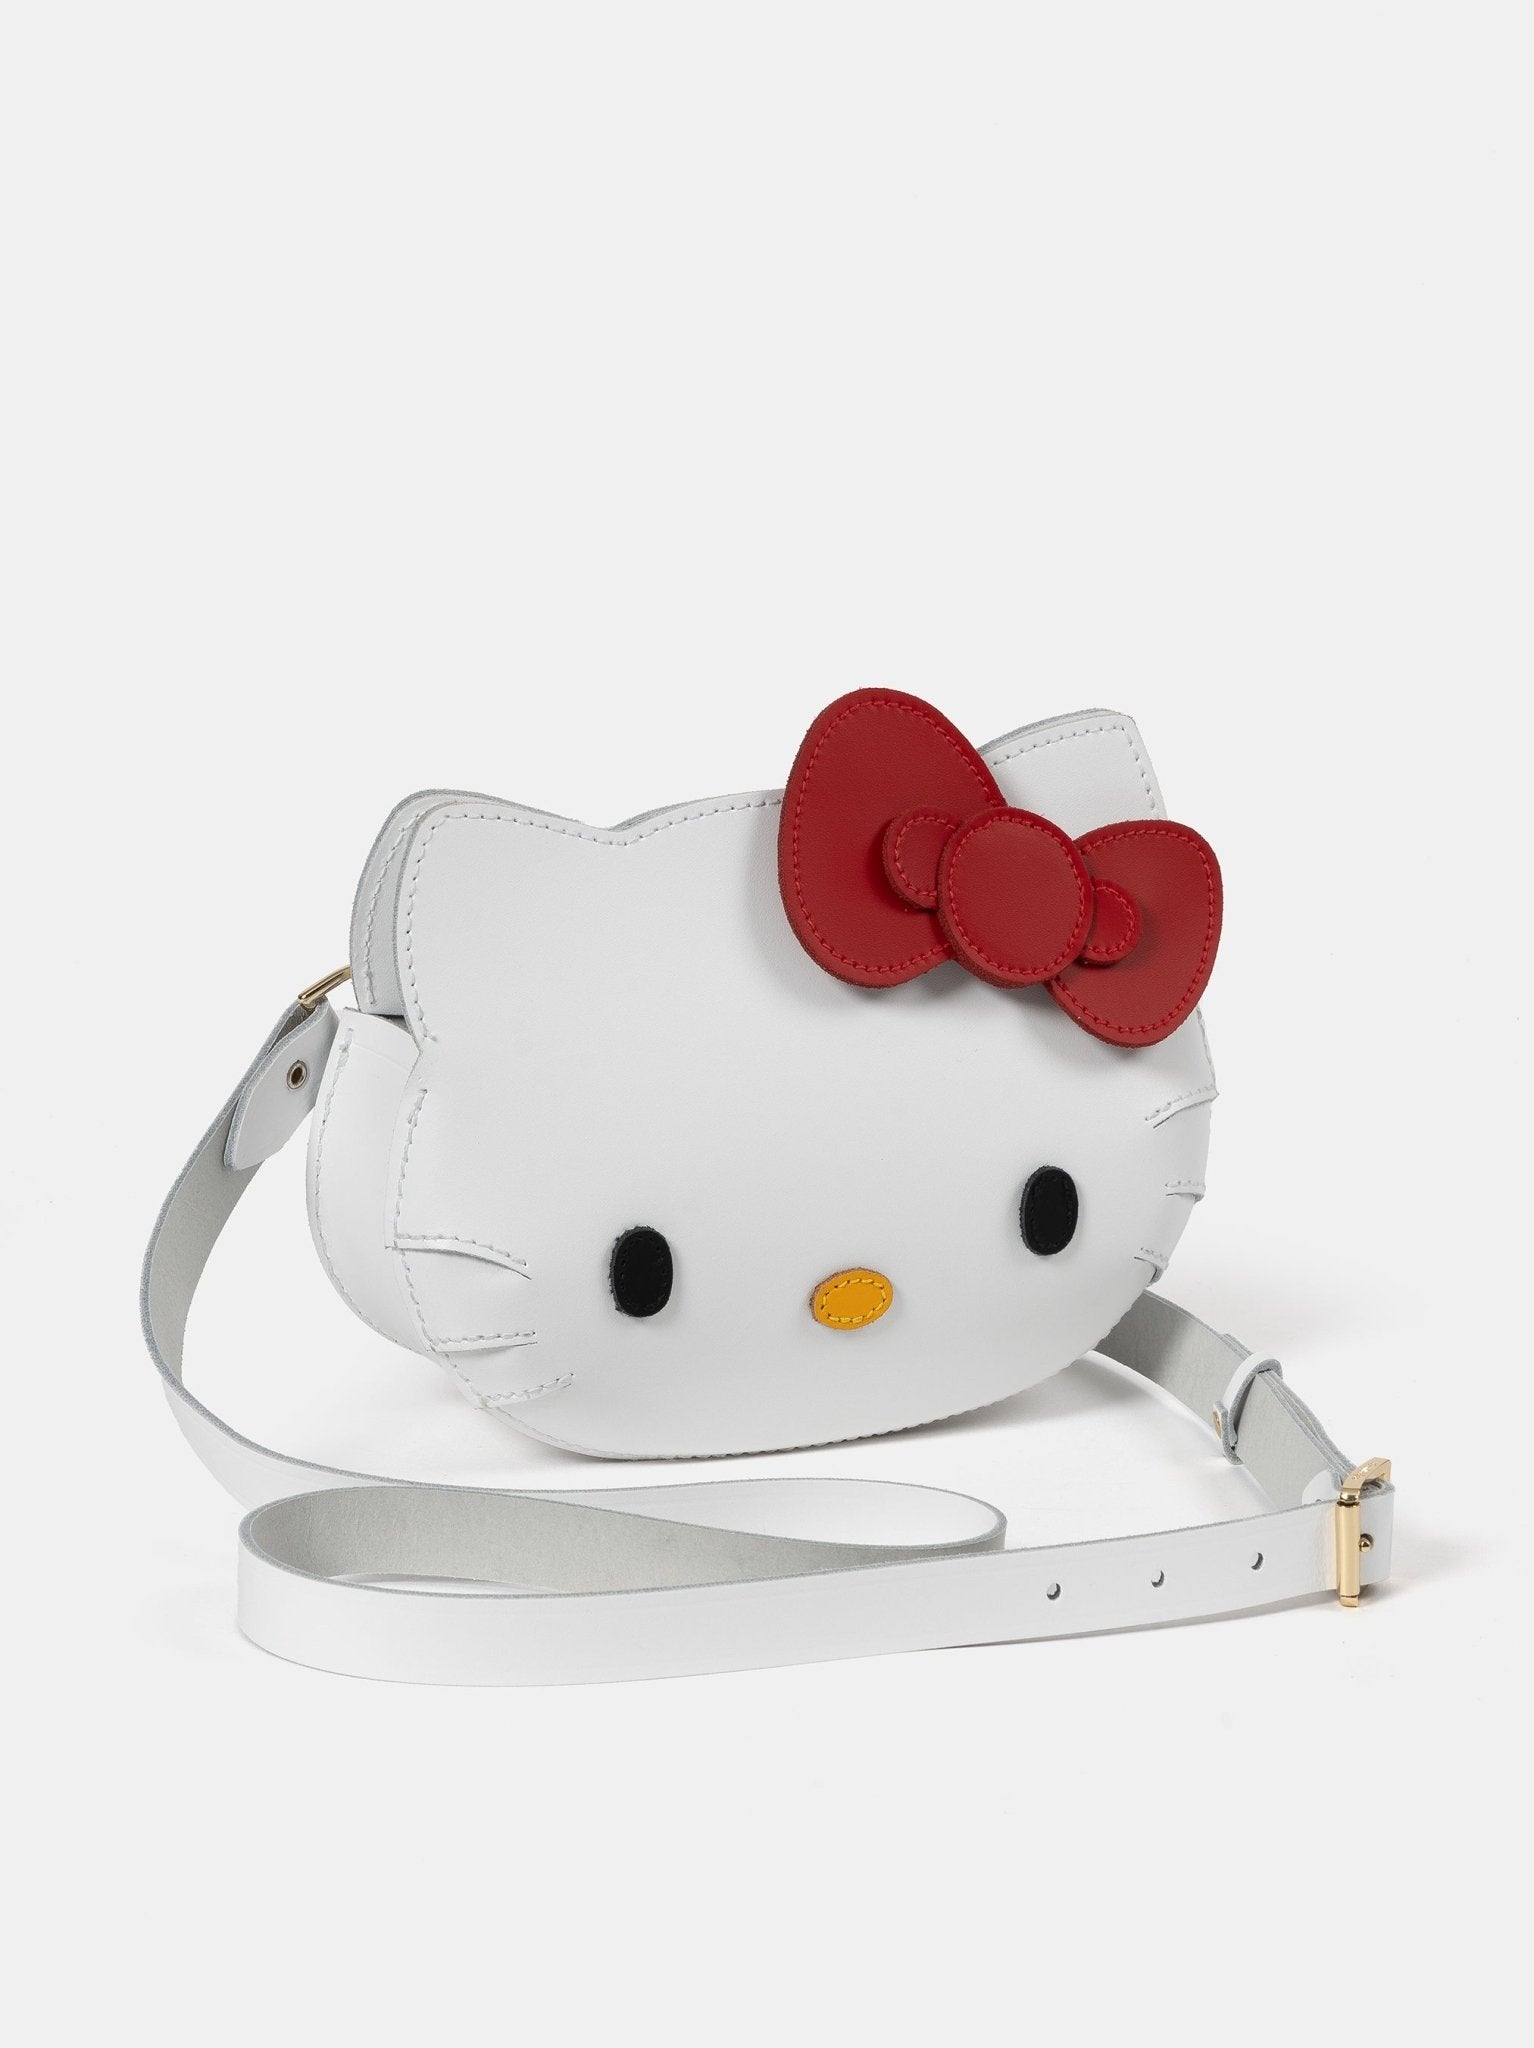 The Mini Hello Kitty Face Bag - Cambridge Satchel